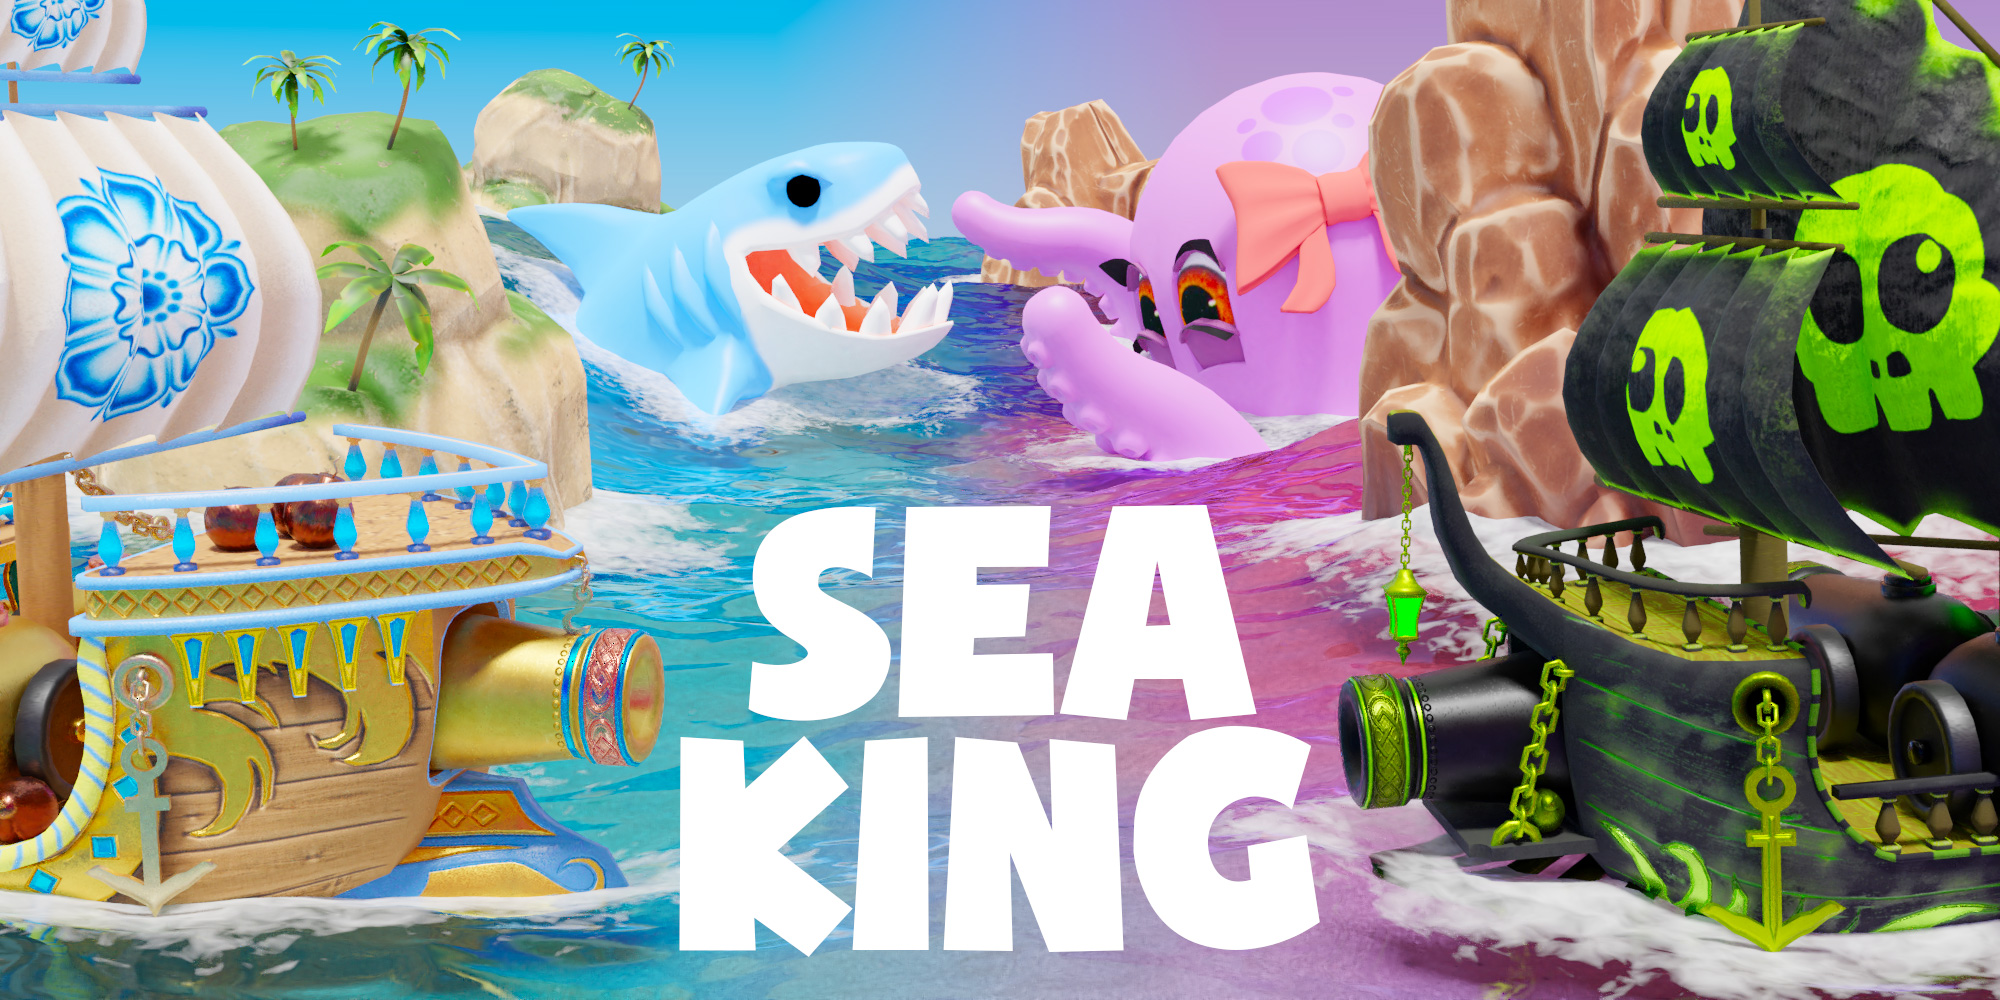 Nintendo sea of. King_of_Seas_ игра. Морские игры на Nintendo. King of Seas геймплей. Сеа Кинг.